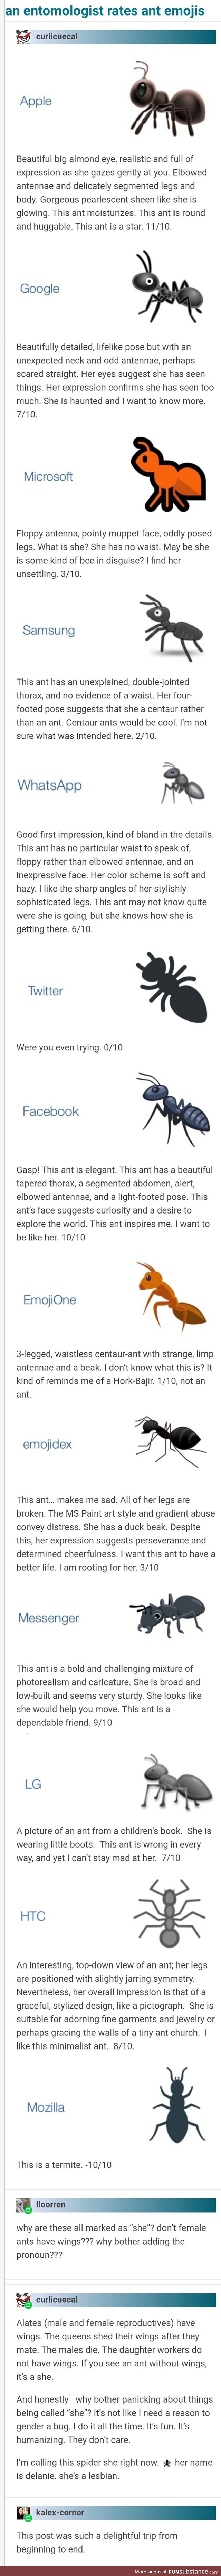 Entomologist Rates Emoji Ants [does this make them an Antomologist?]